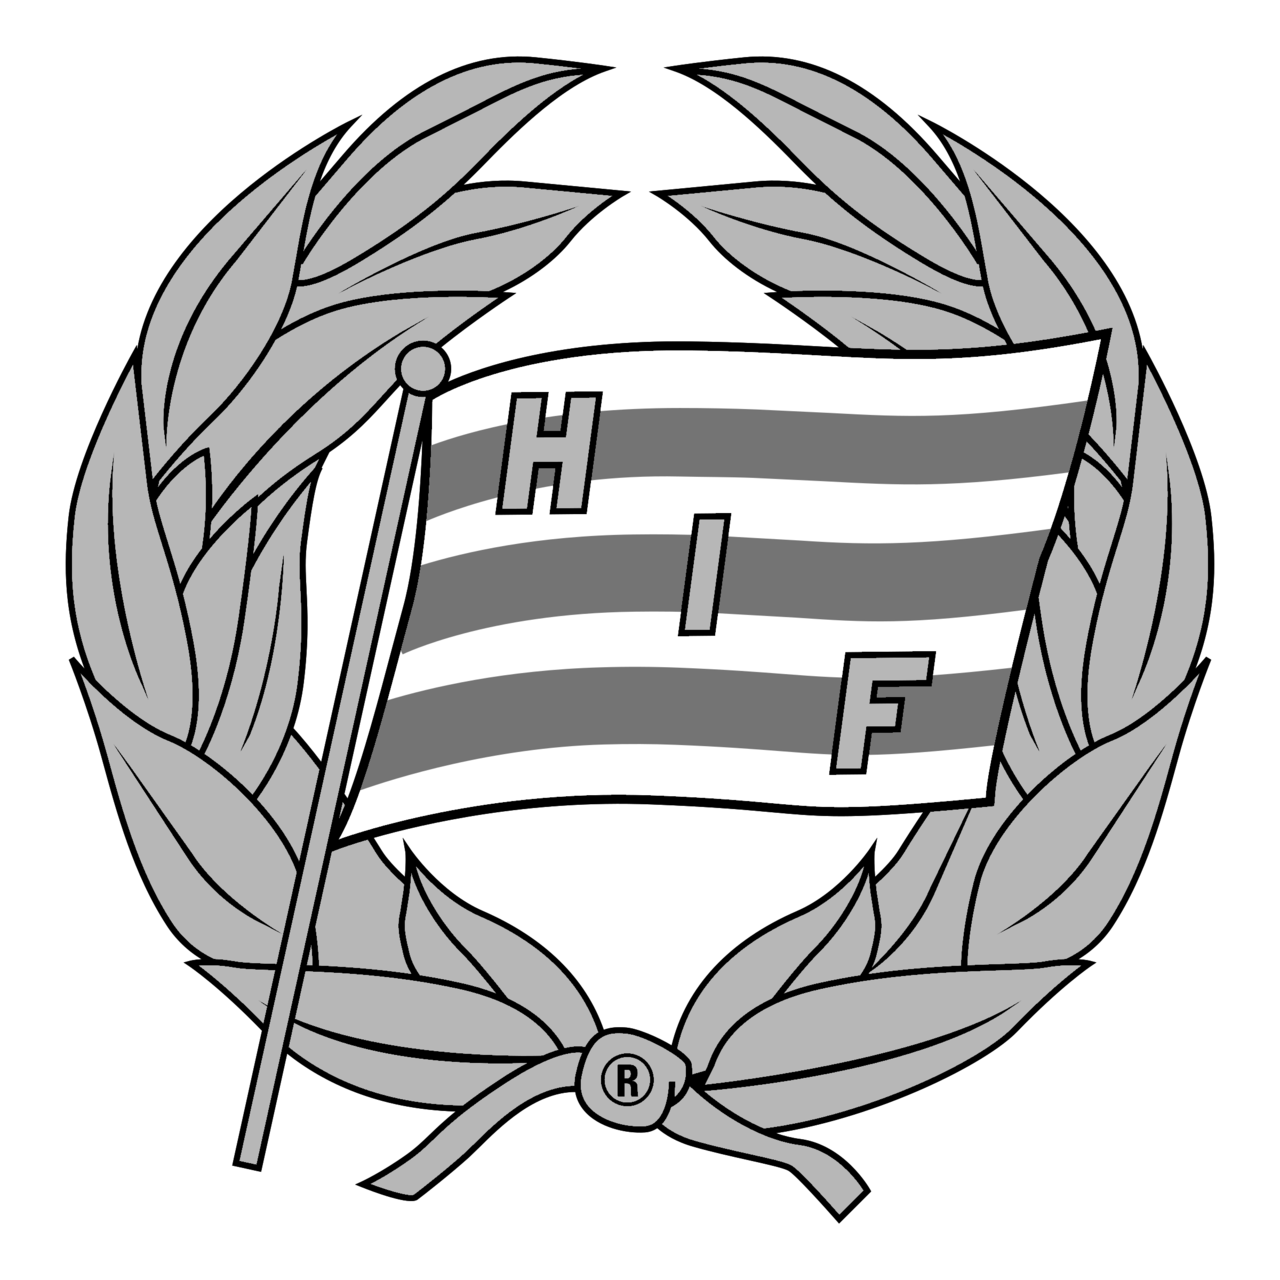 hammarby-logo-black-and-white